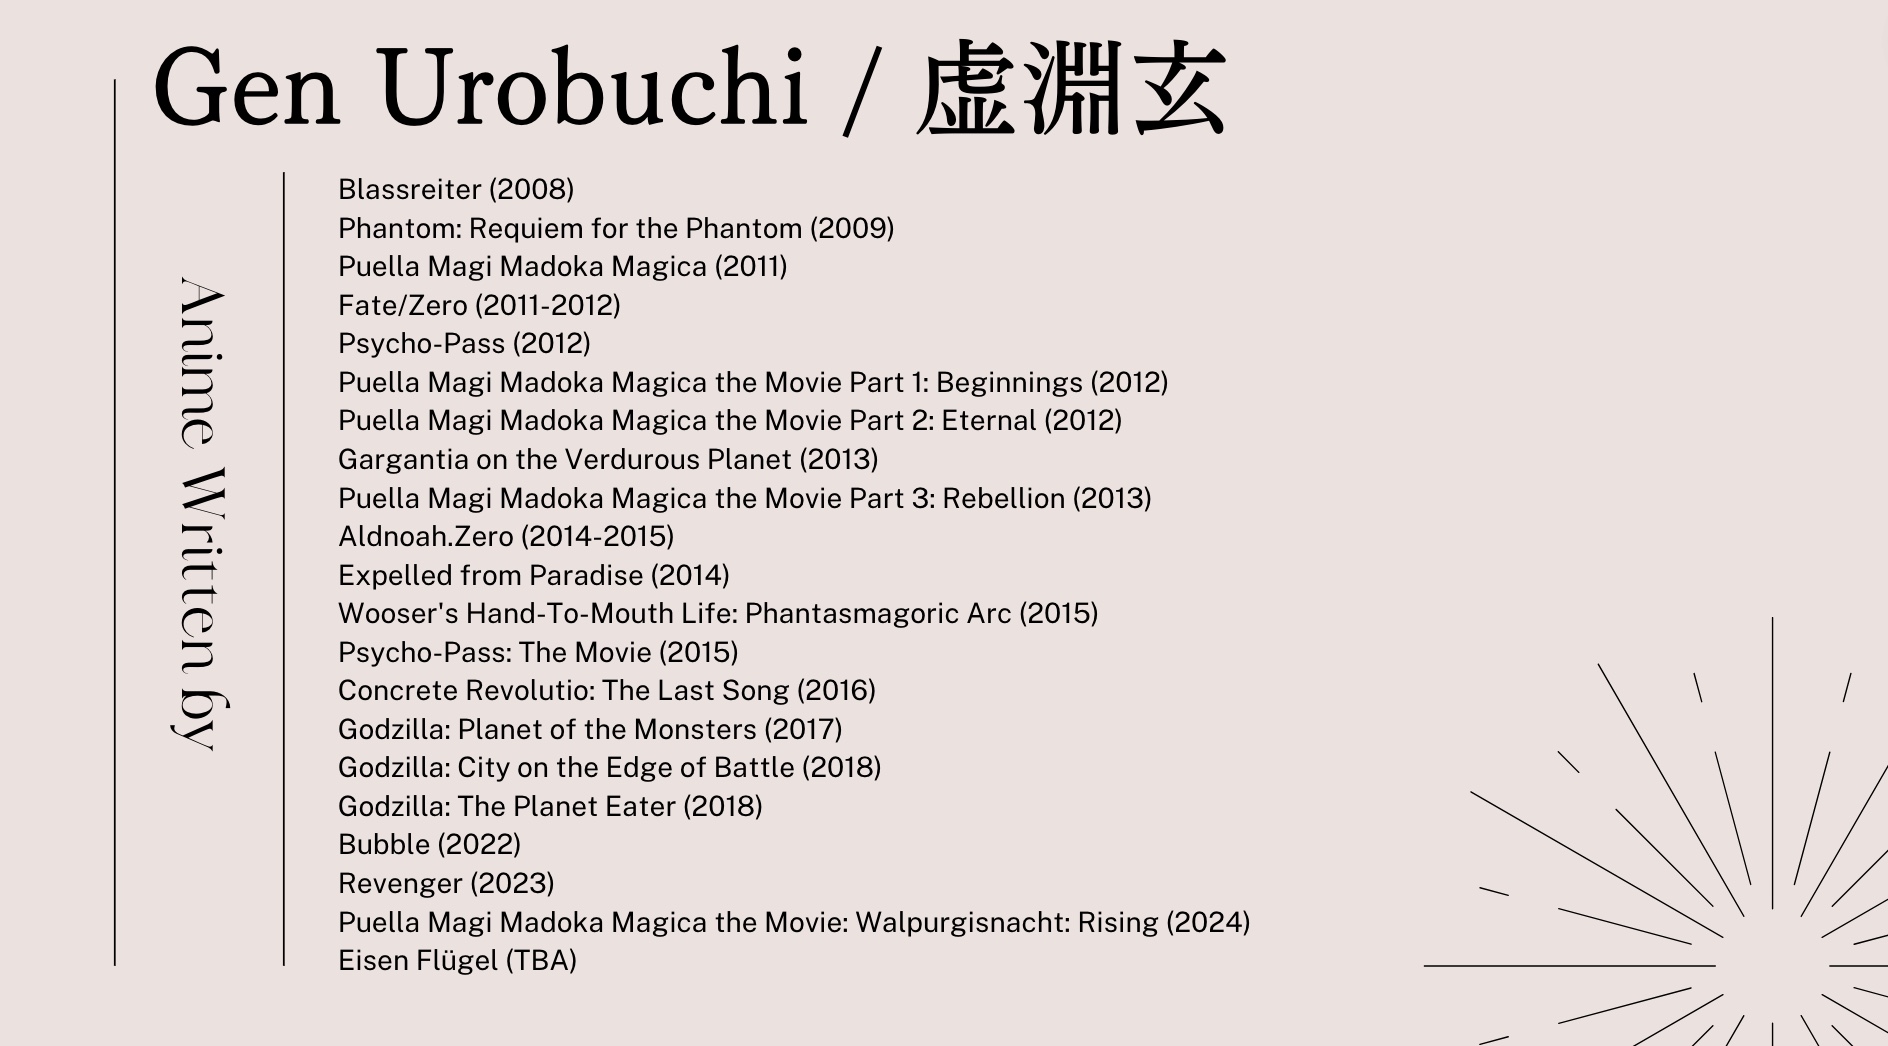 List of Gen Urobuchi's Works